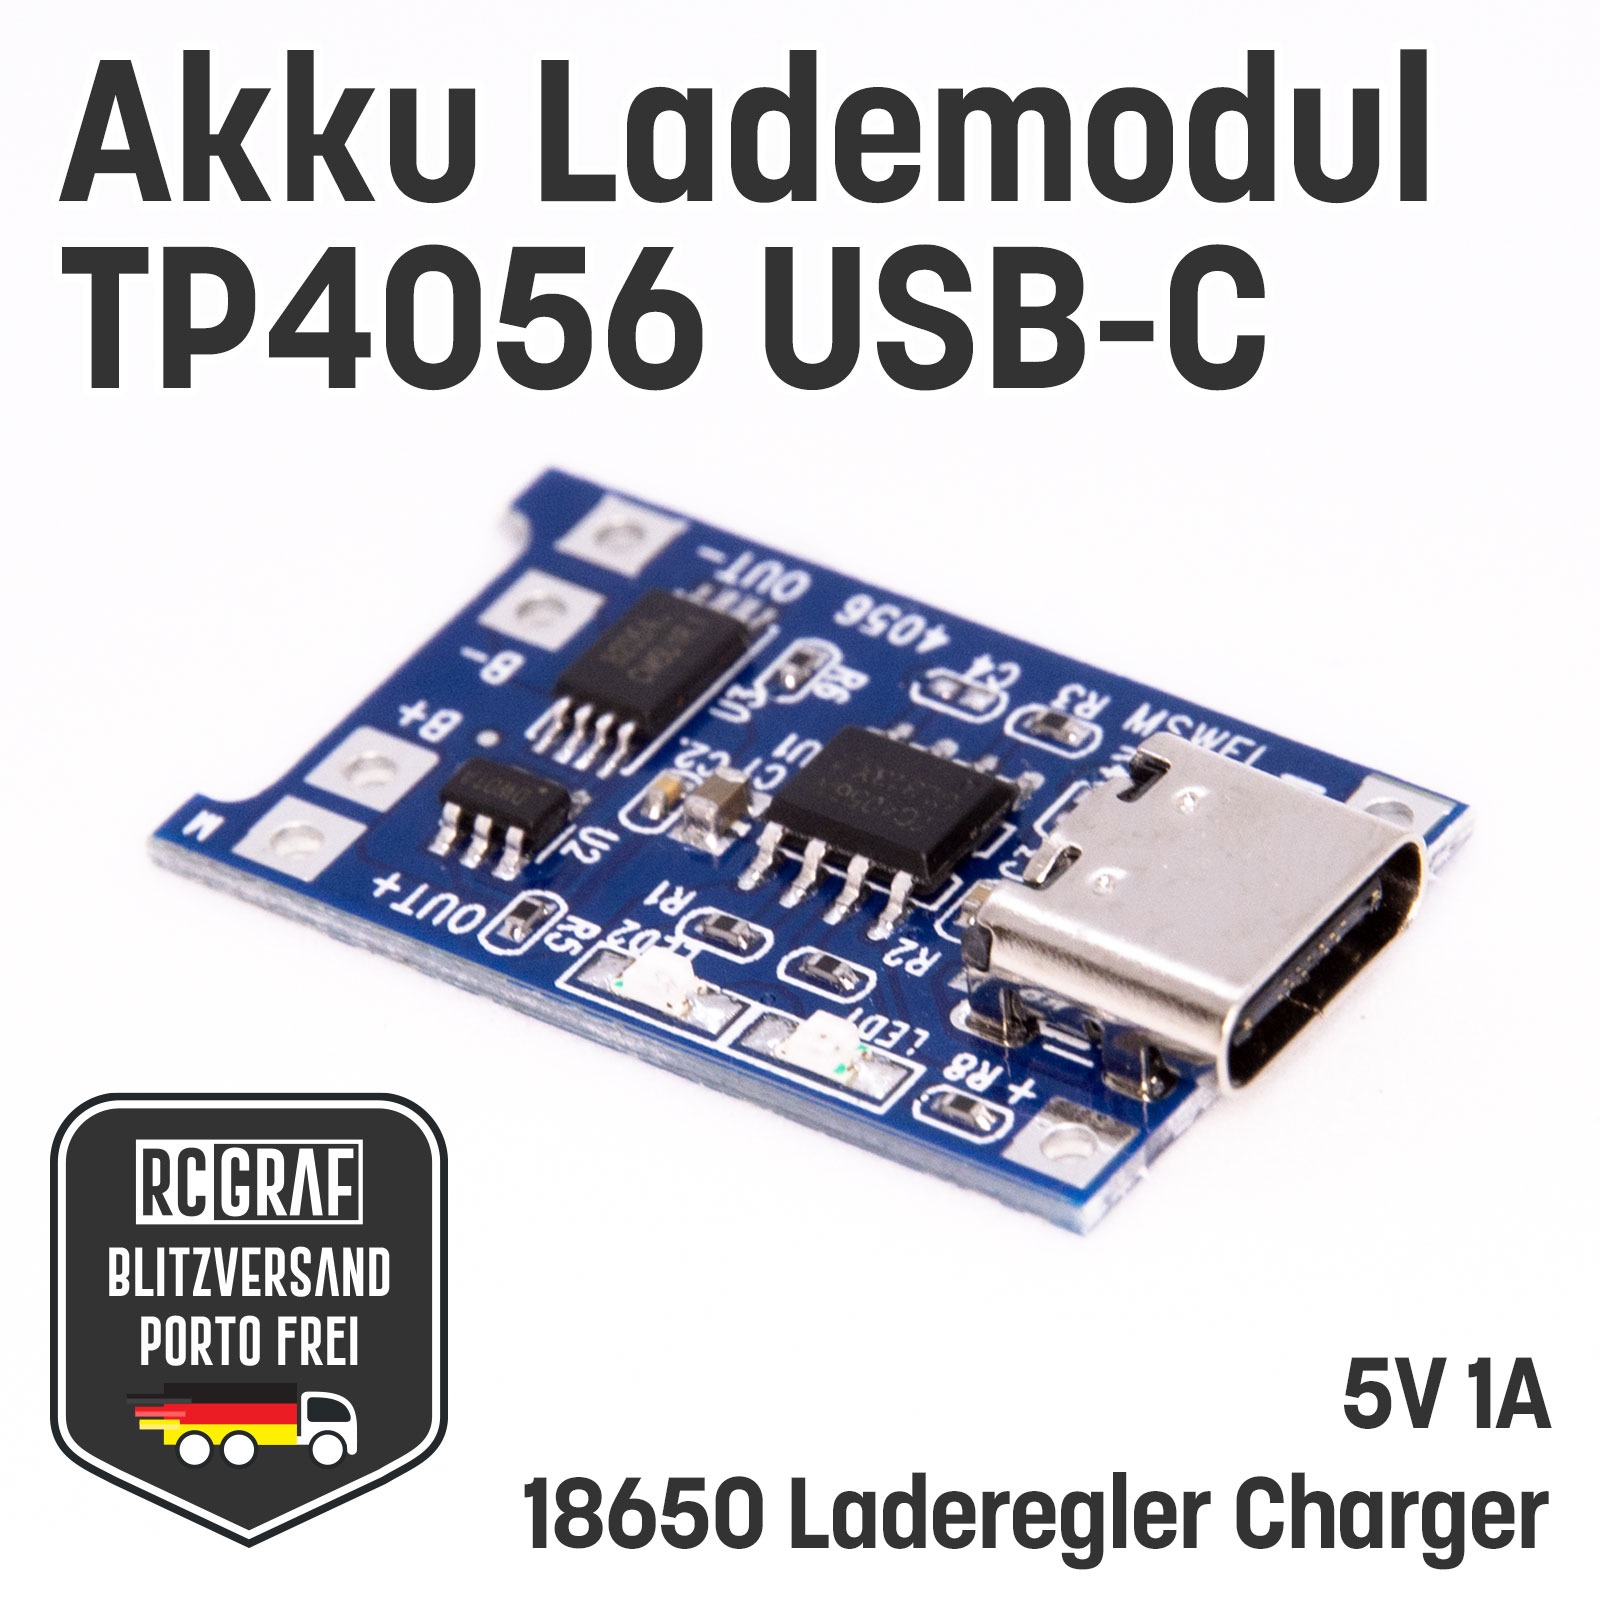 40x Akku Lademodul 5V 1A TP4056 USB C 18650 mit Schutzschaltung 3